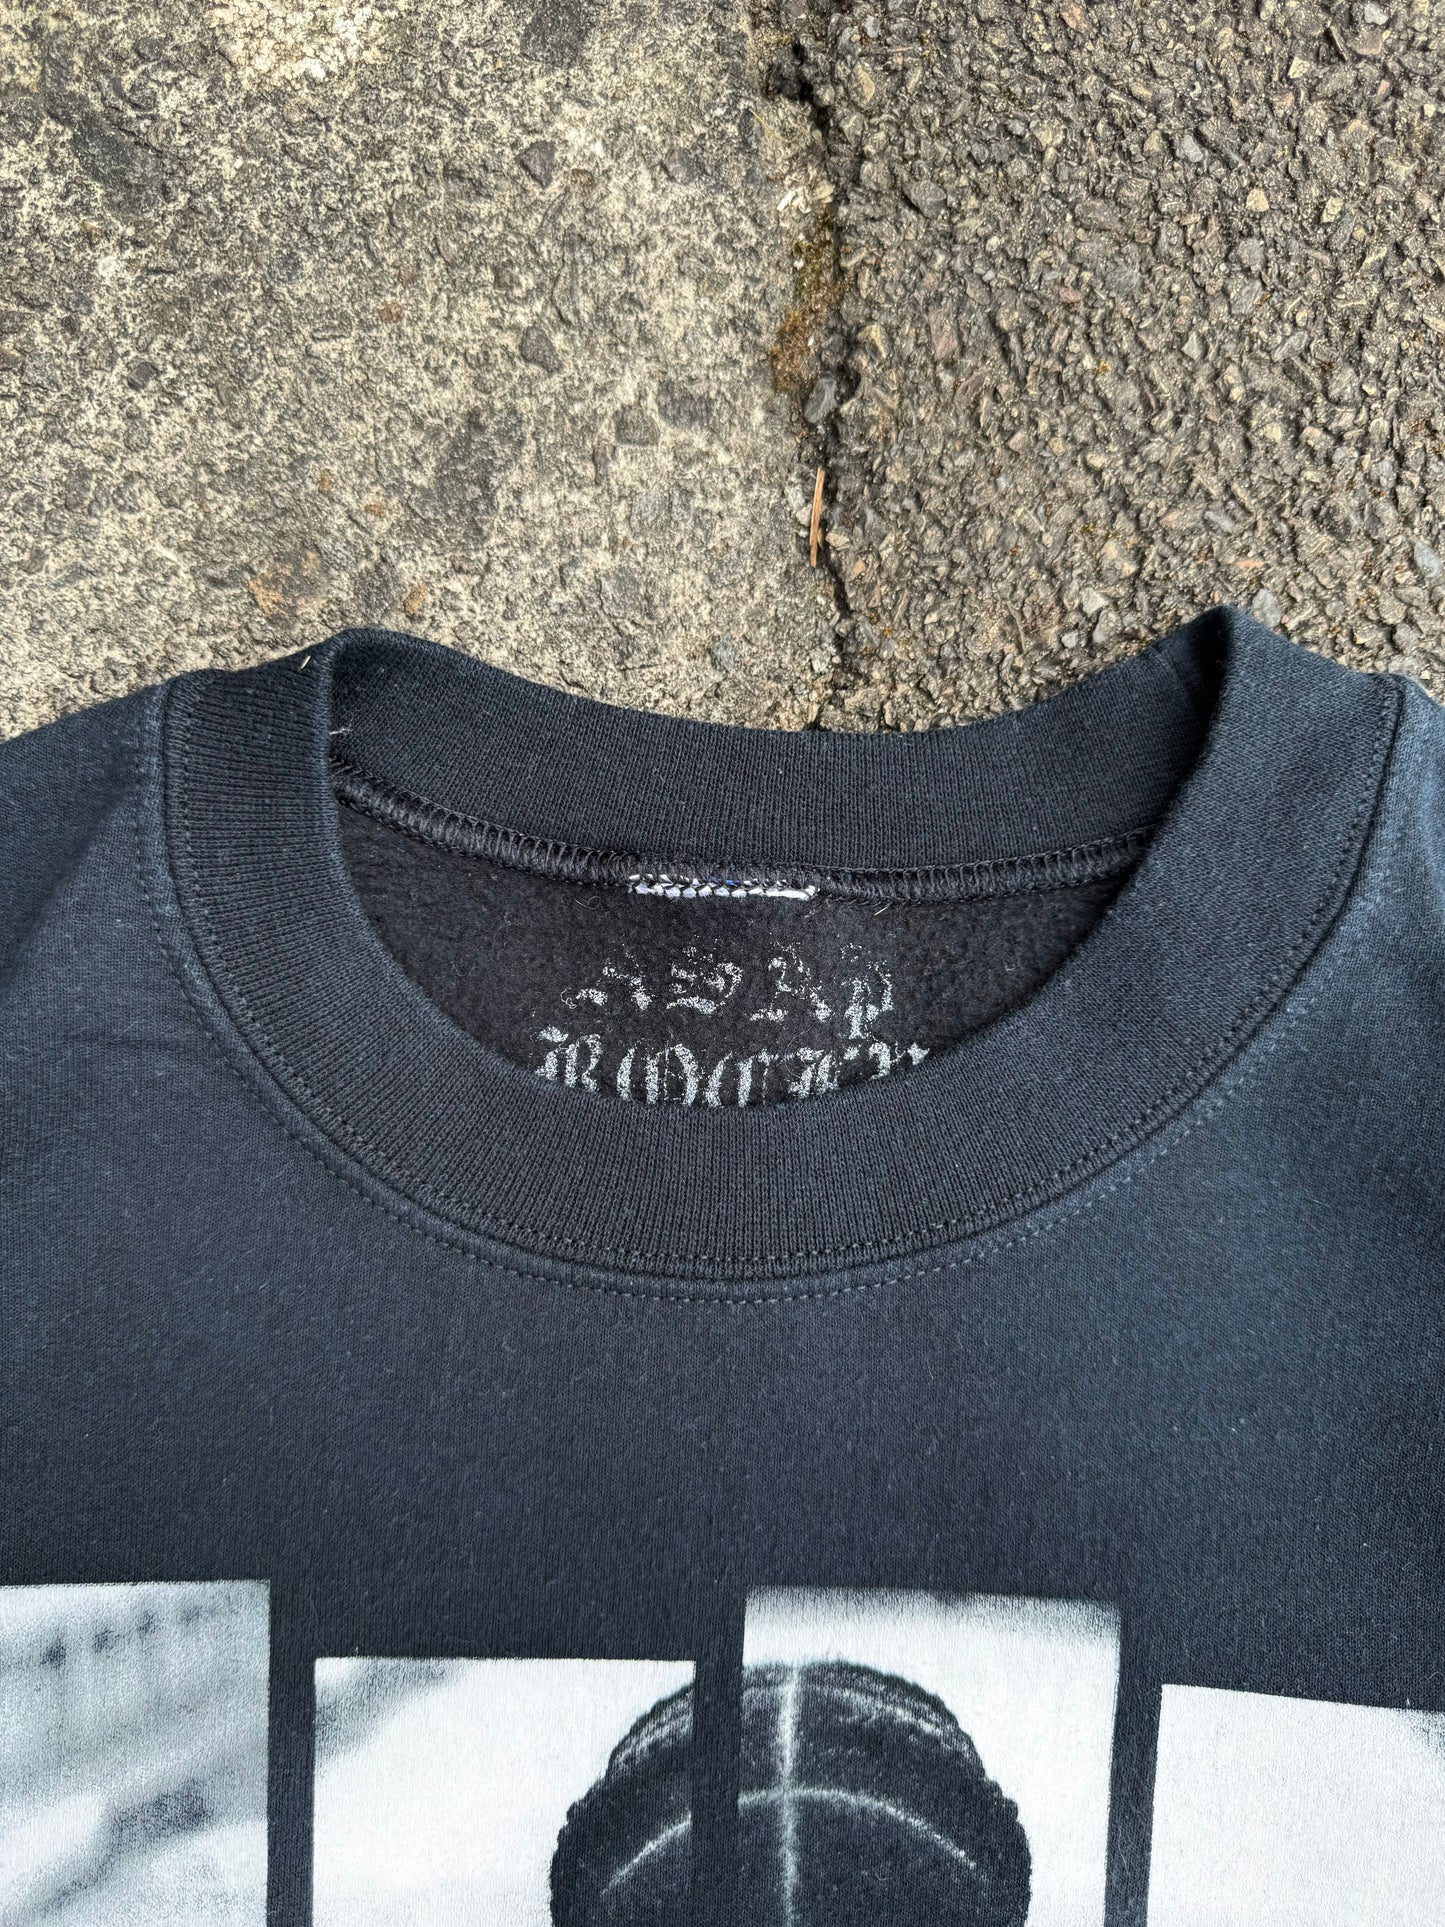 Black Long Live A$AP Sweatshirt